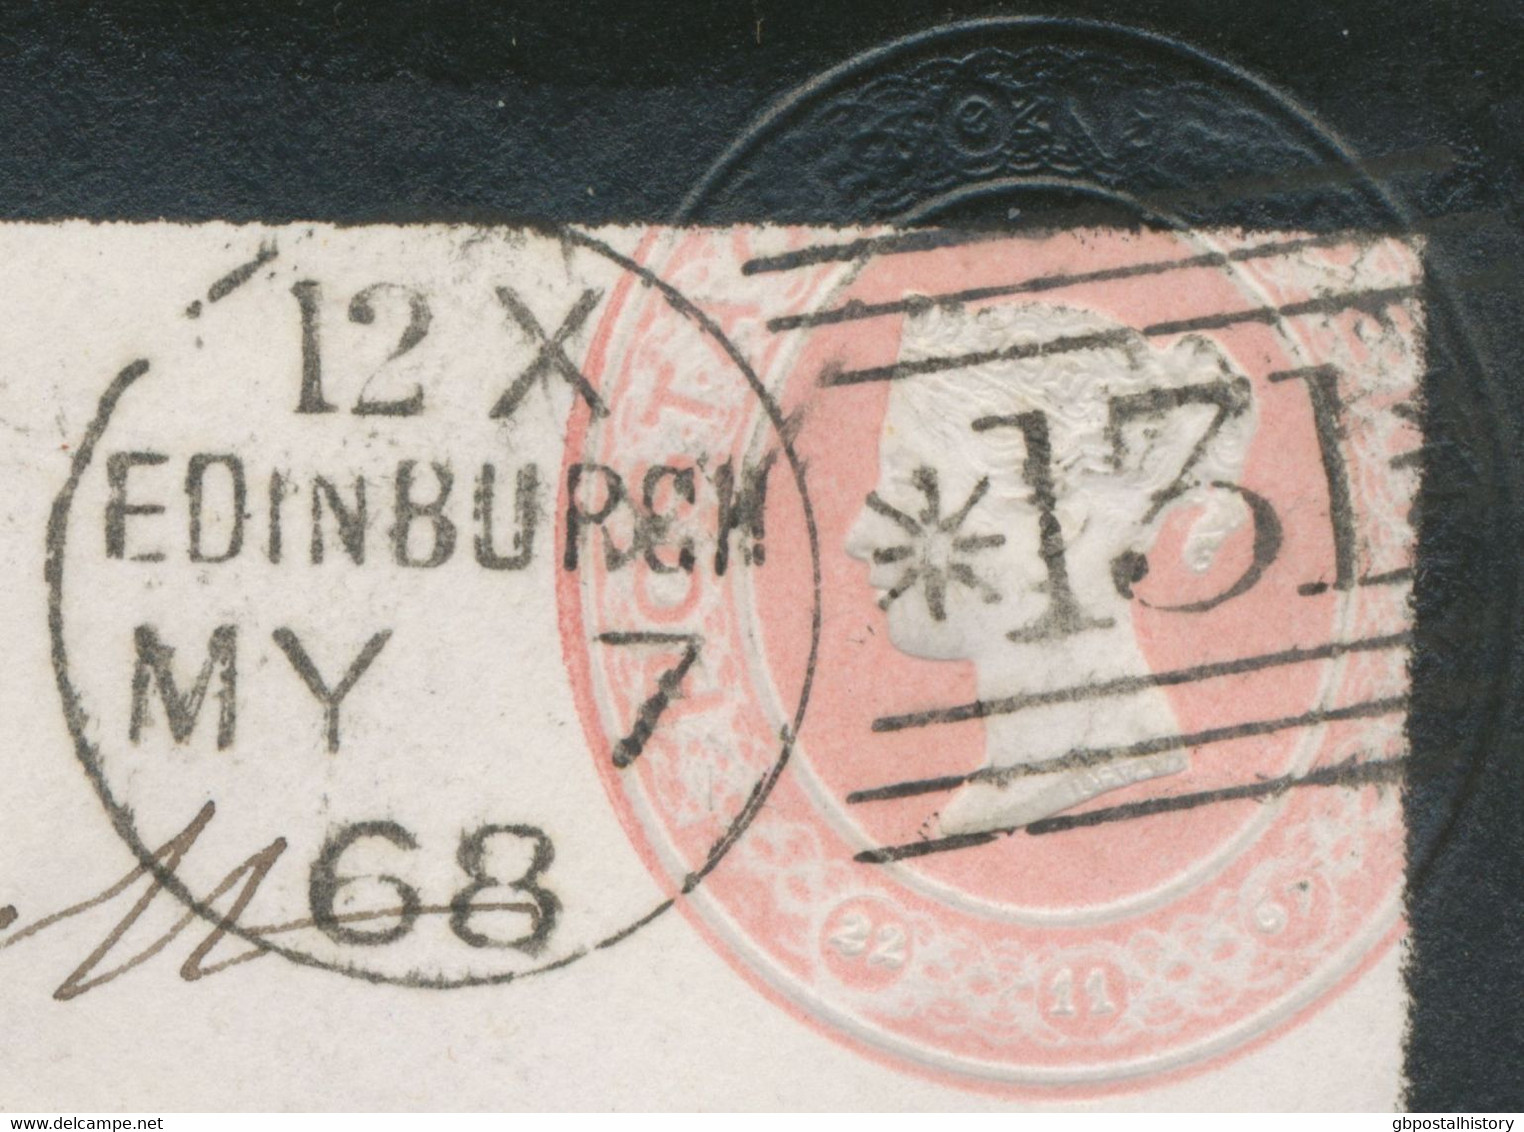 GB „131 / EDINBURGH“ Scottish Duplex Postmark (between 3 Thin Bars, Different Lenght, 131 Between Stars) On VF PS - Lettres & Documents